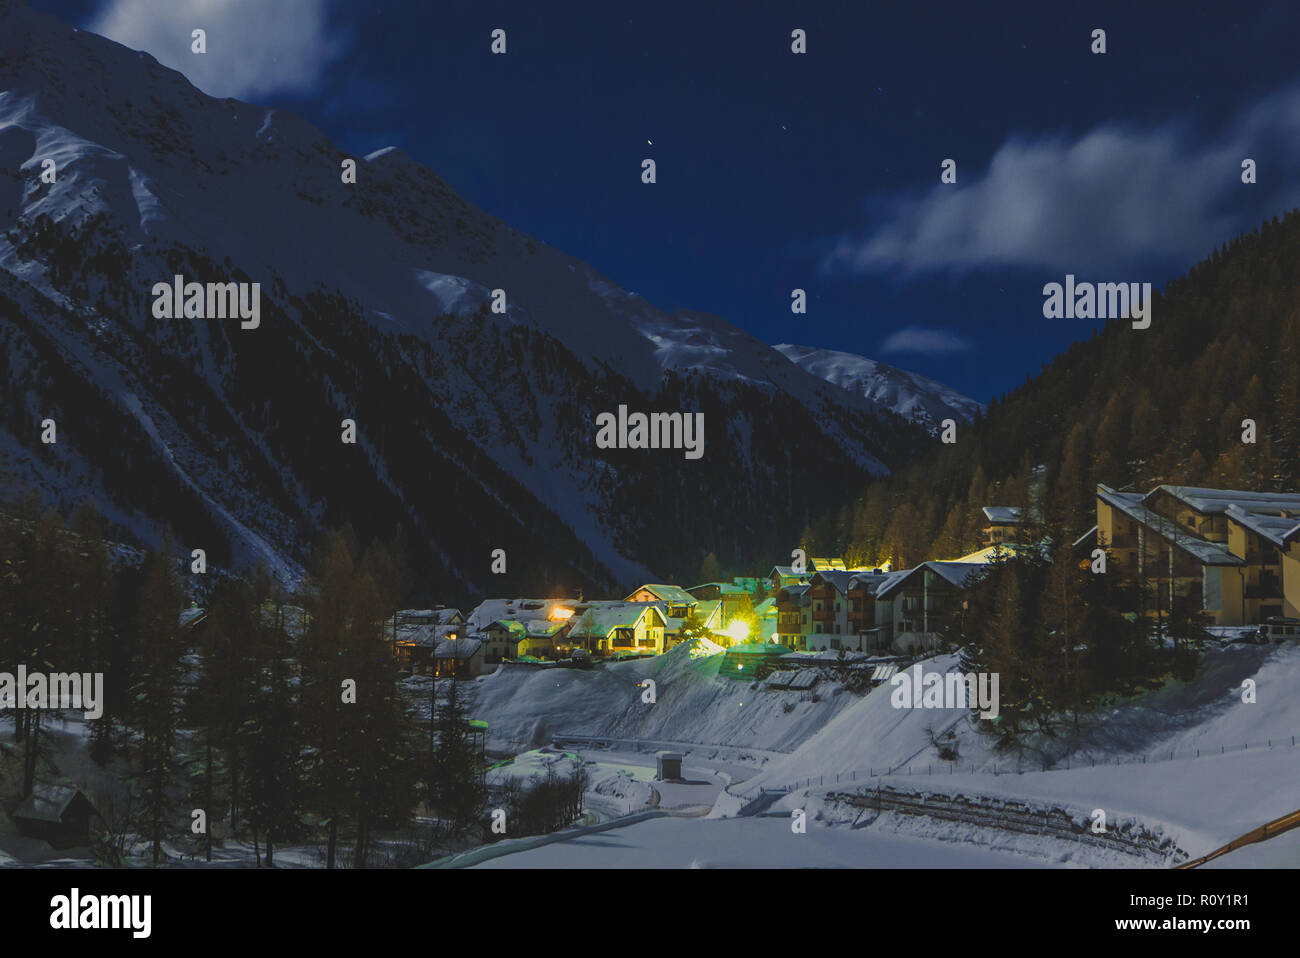 Winter cottage at night in popular ski resort Solda, Italy Stock Photo